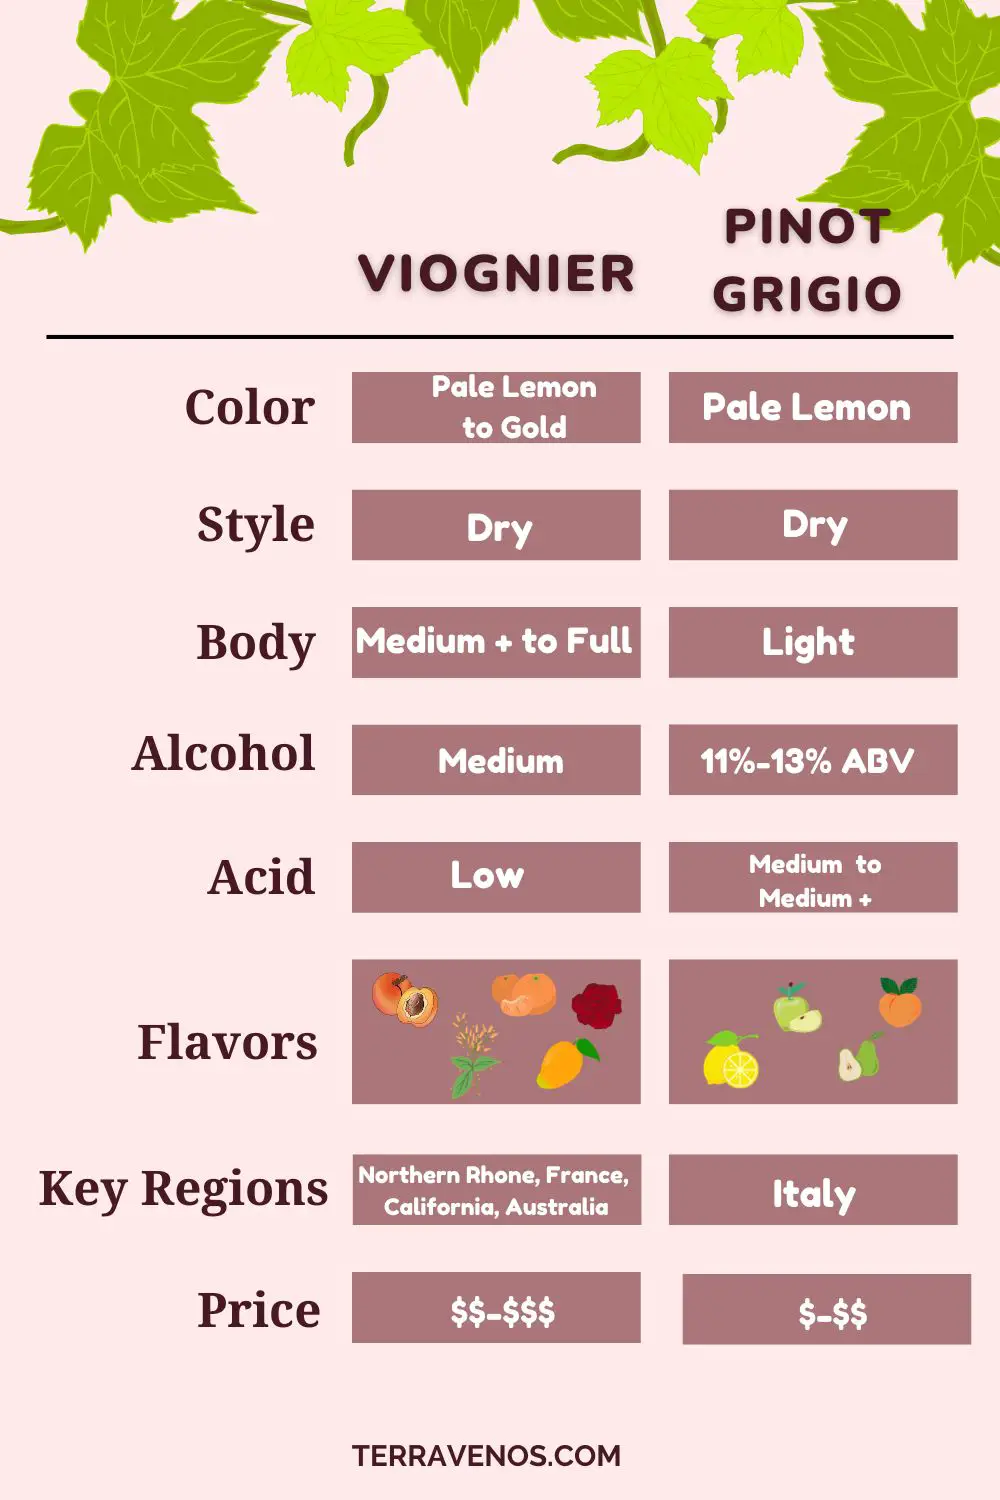 viognier-vs-pinot-grigio-infographic